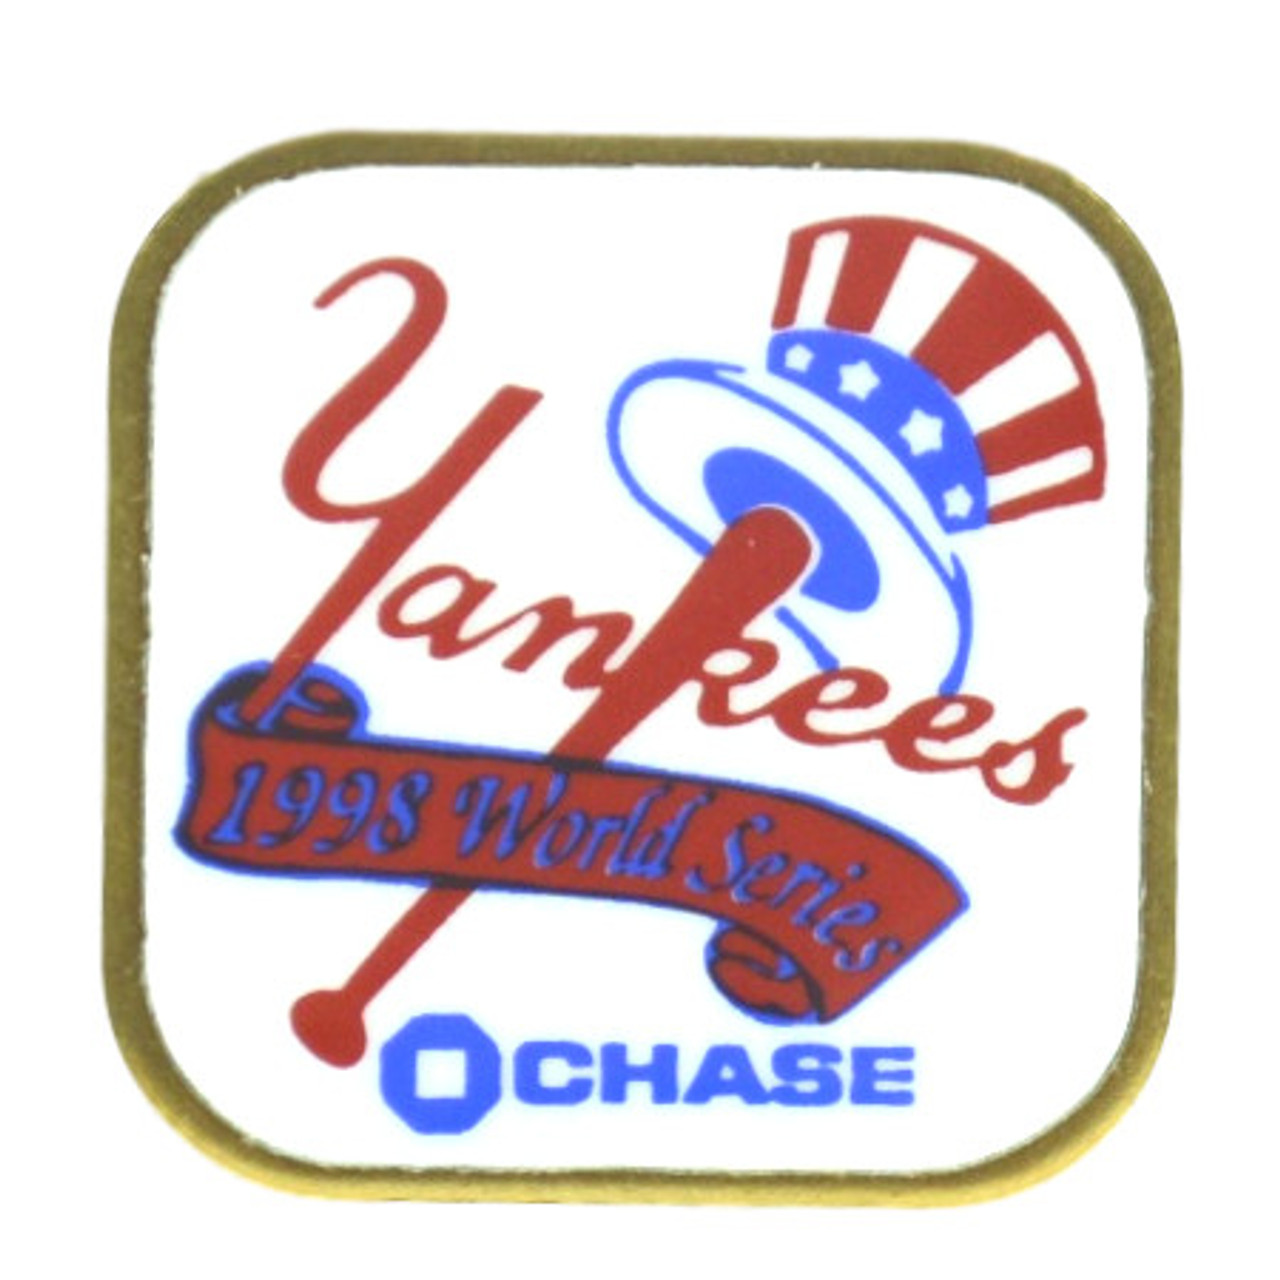 Vintage NY New York Yankees 1998 World Series Championship MLB T-Shirt  Youth M